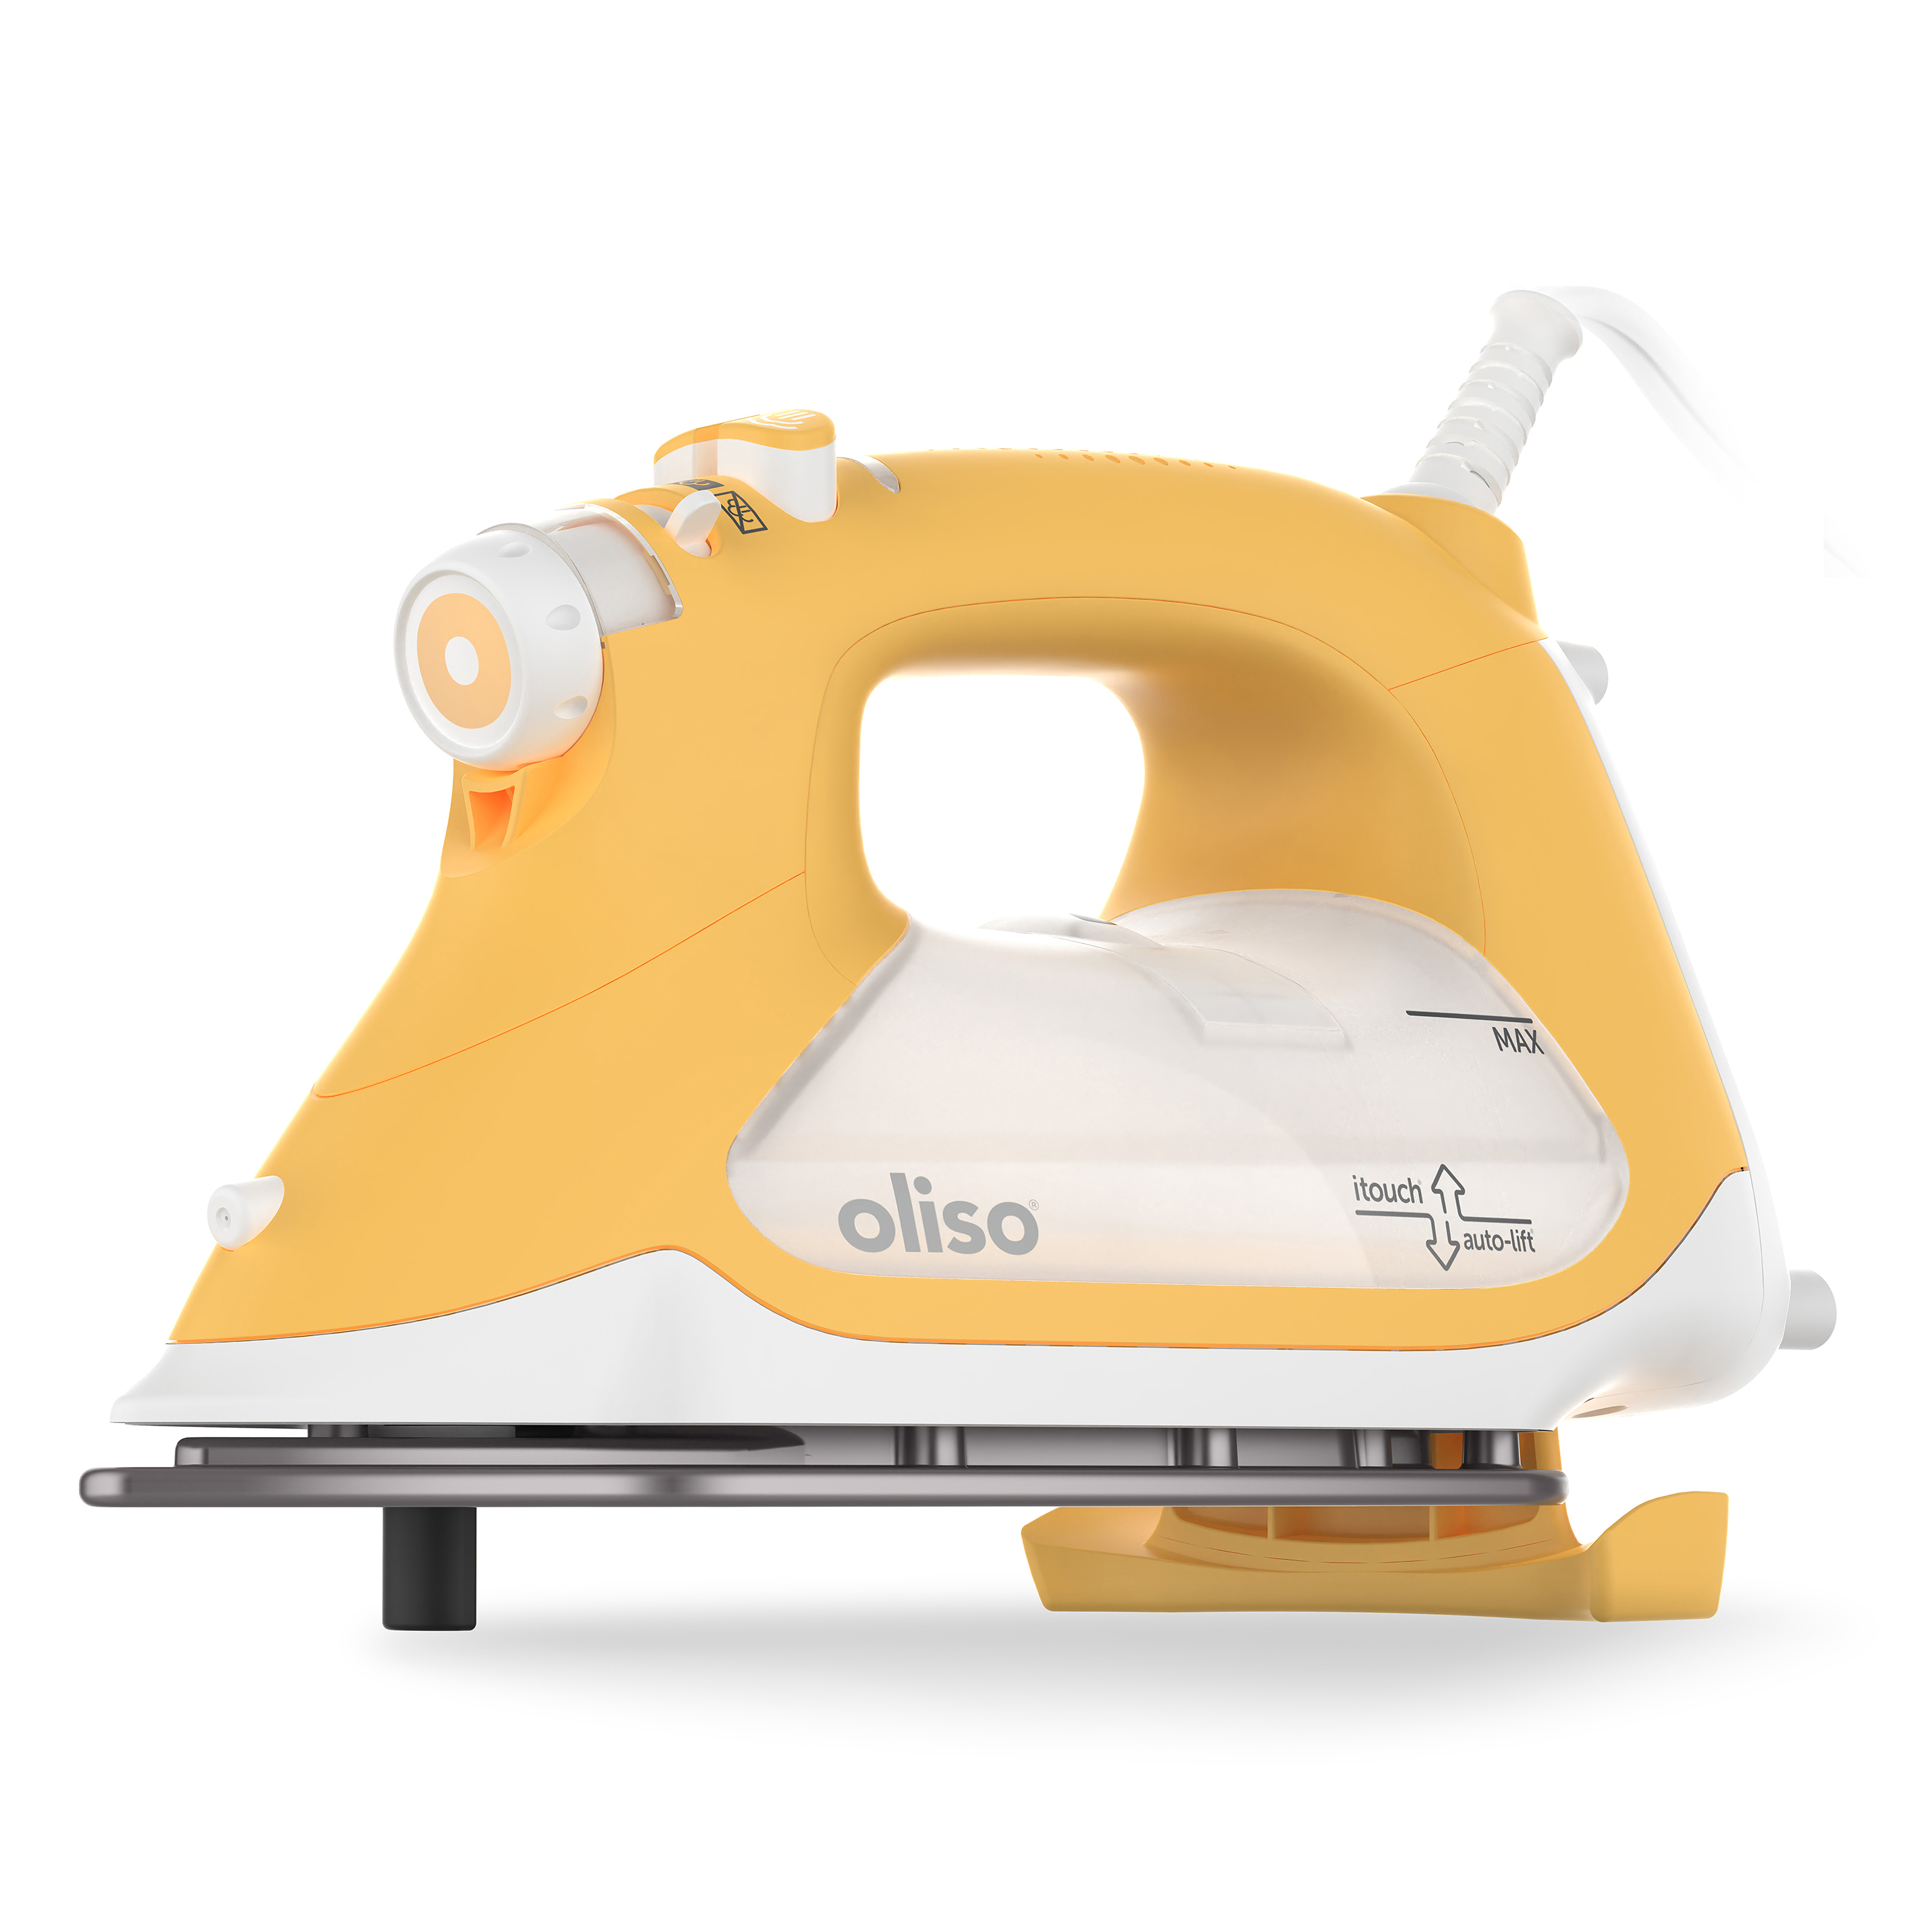 Picture of Oliso Smart Iron: TG1600 Pro Plus